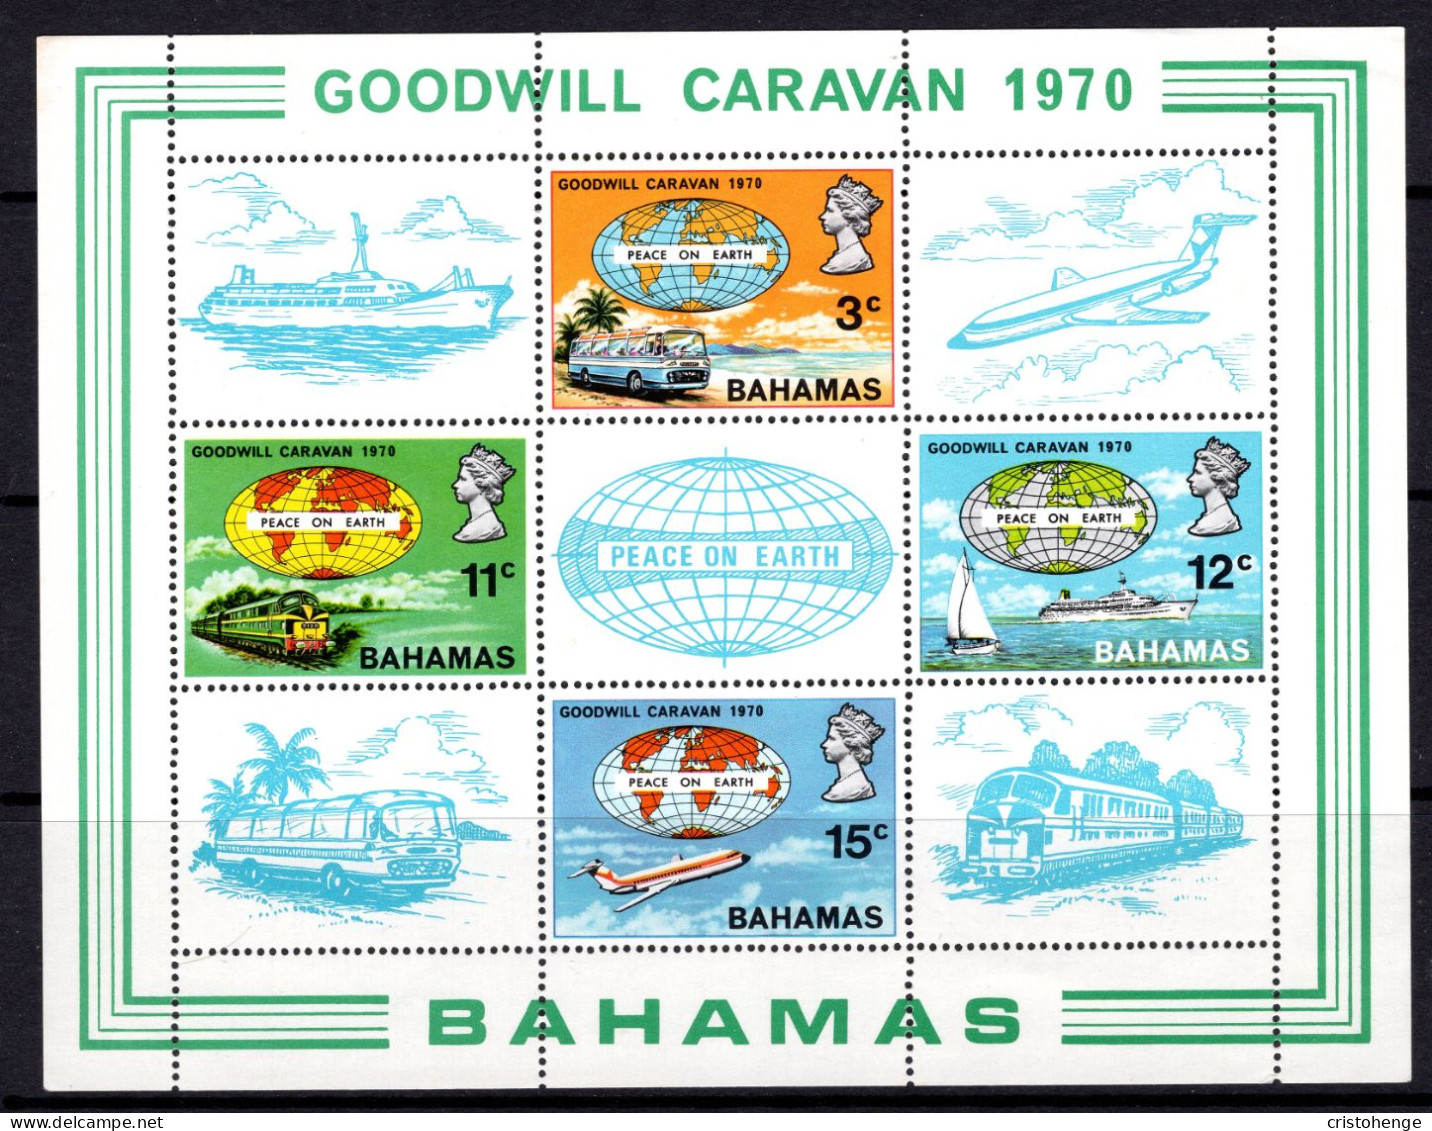 Bahamas 1970 Goodwill Caravan MS MNH (SG MS351) - 1963-1973 Autonomia Interna